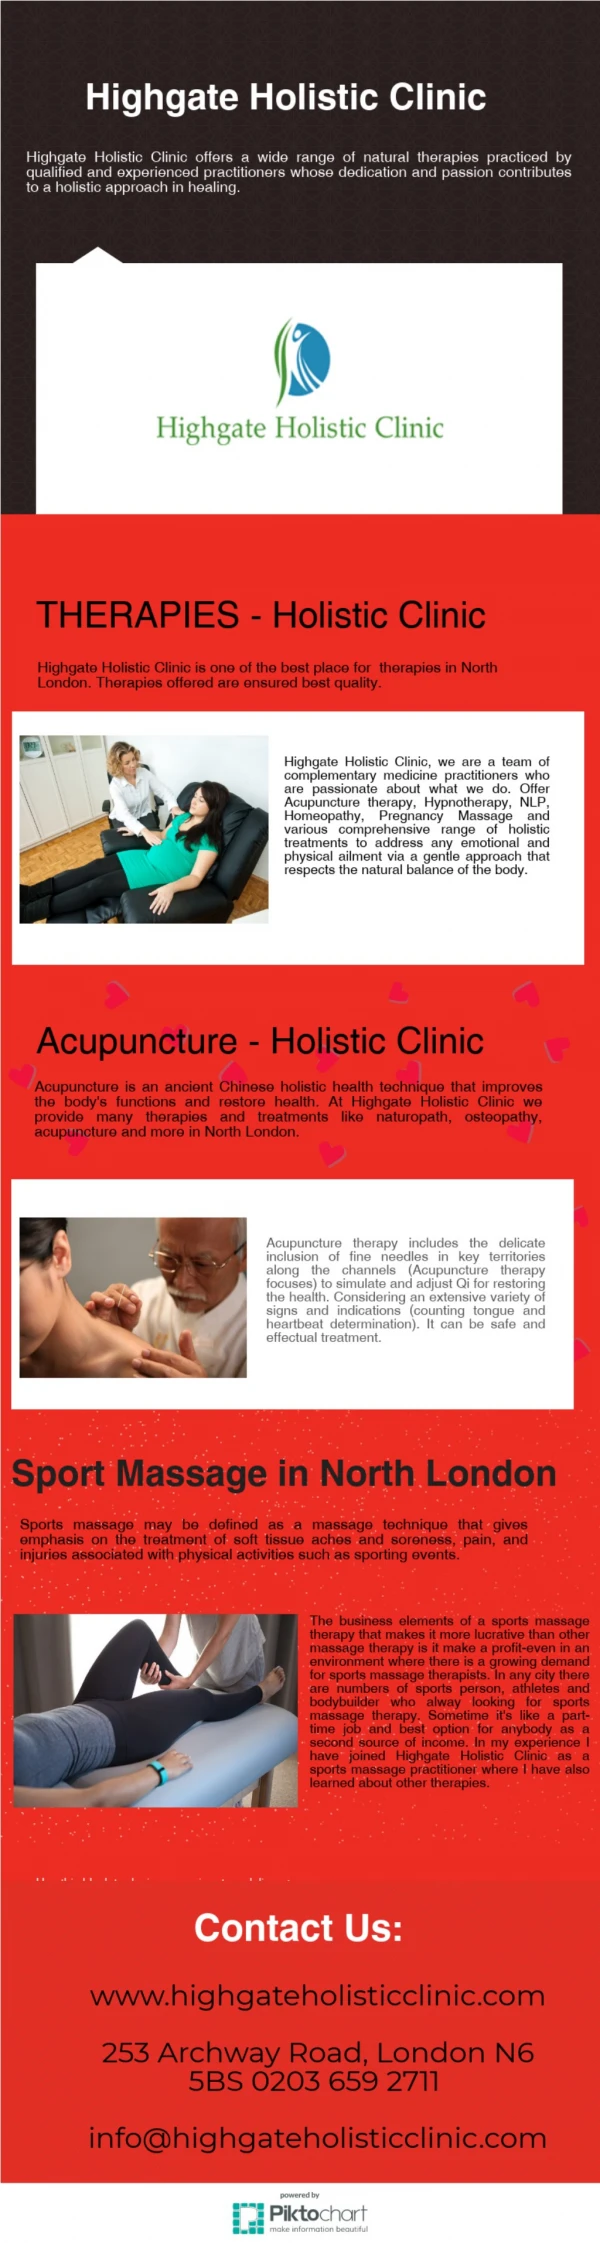 Sport Massage in North London - Highgate Holistic Clinic